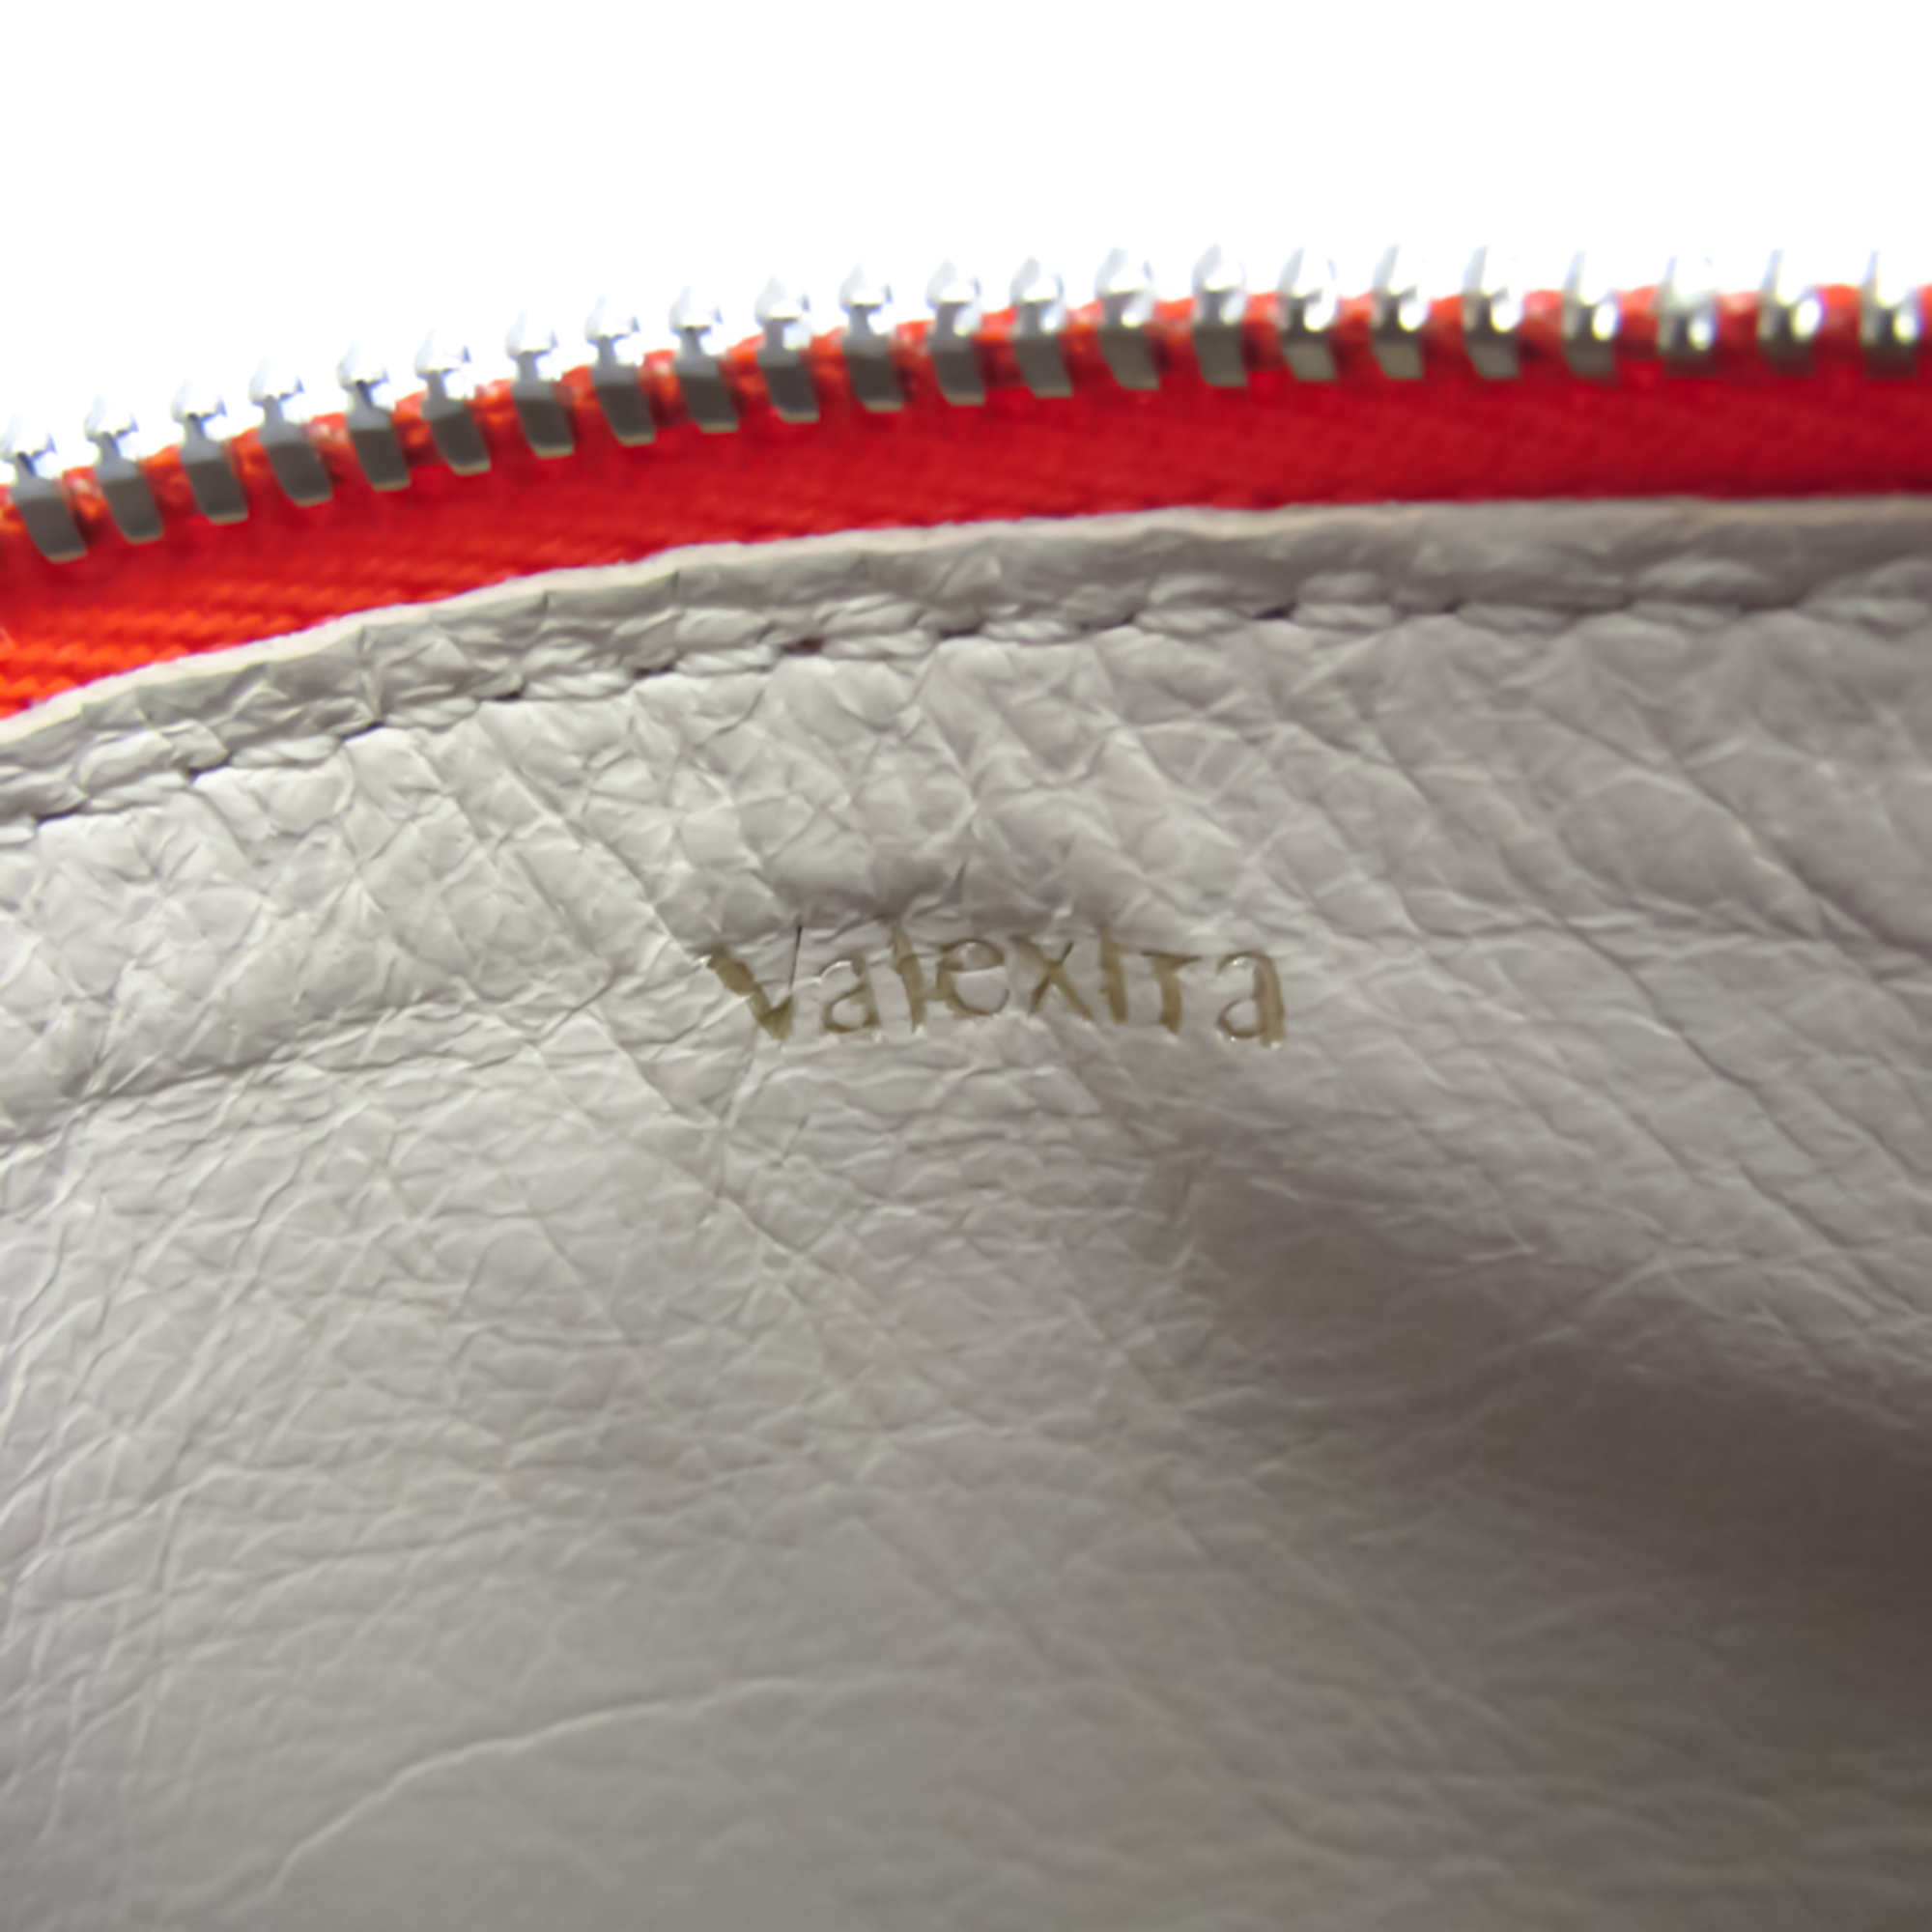 Valextra V2L14 Unisex Leather Pouch Orange